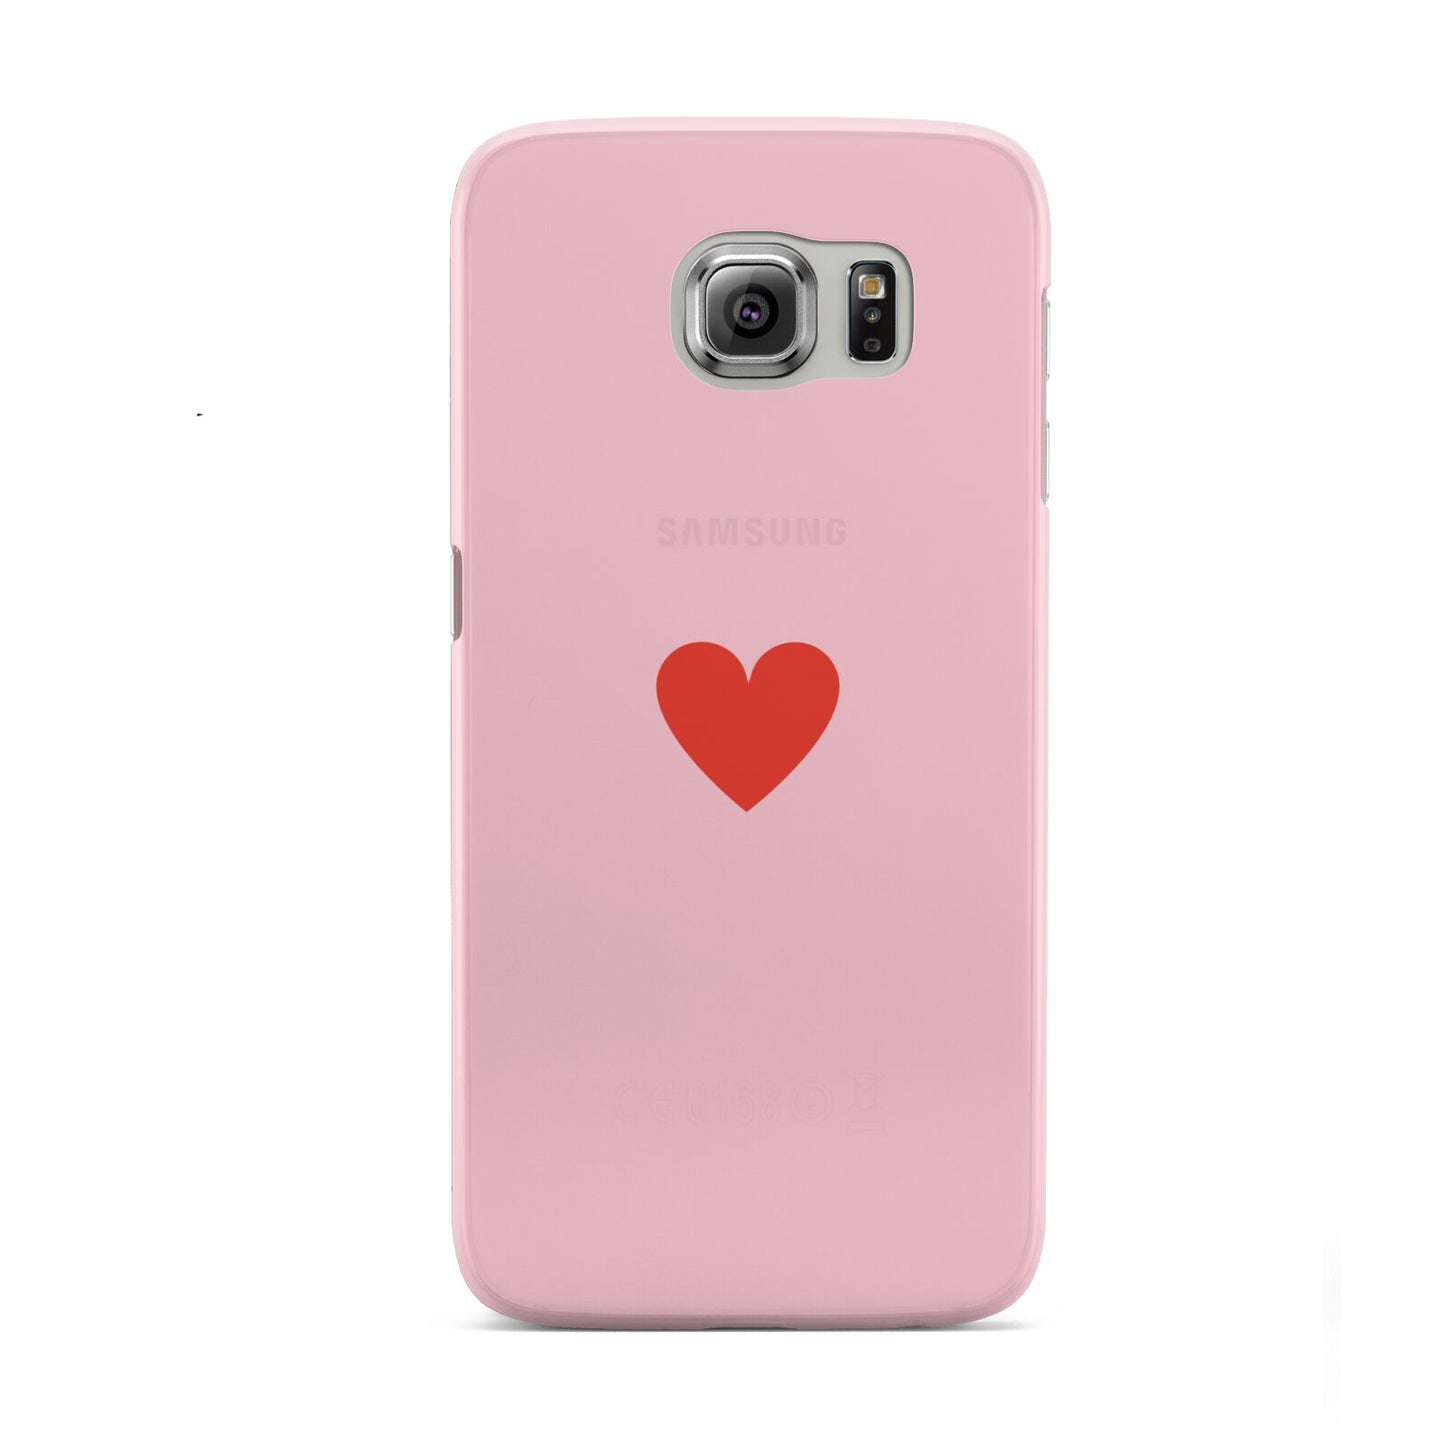 Red Heart Samsung Galaxy S6 Case